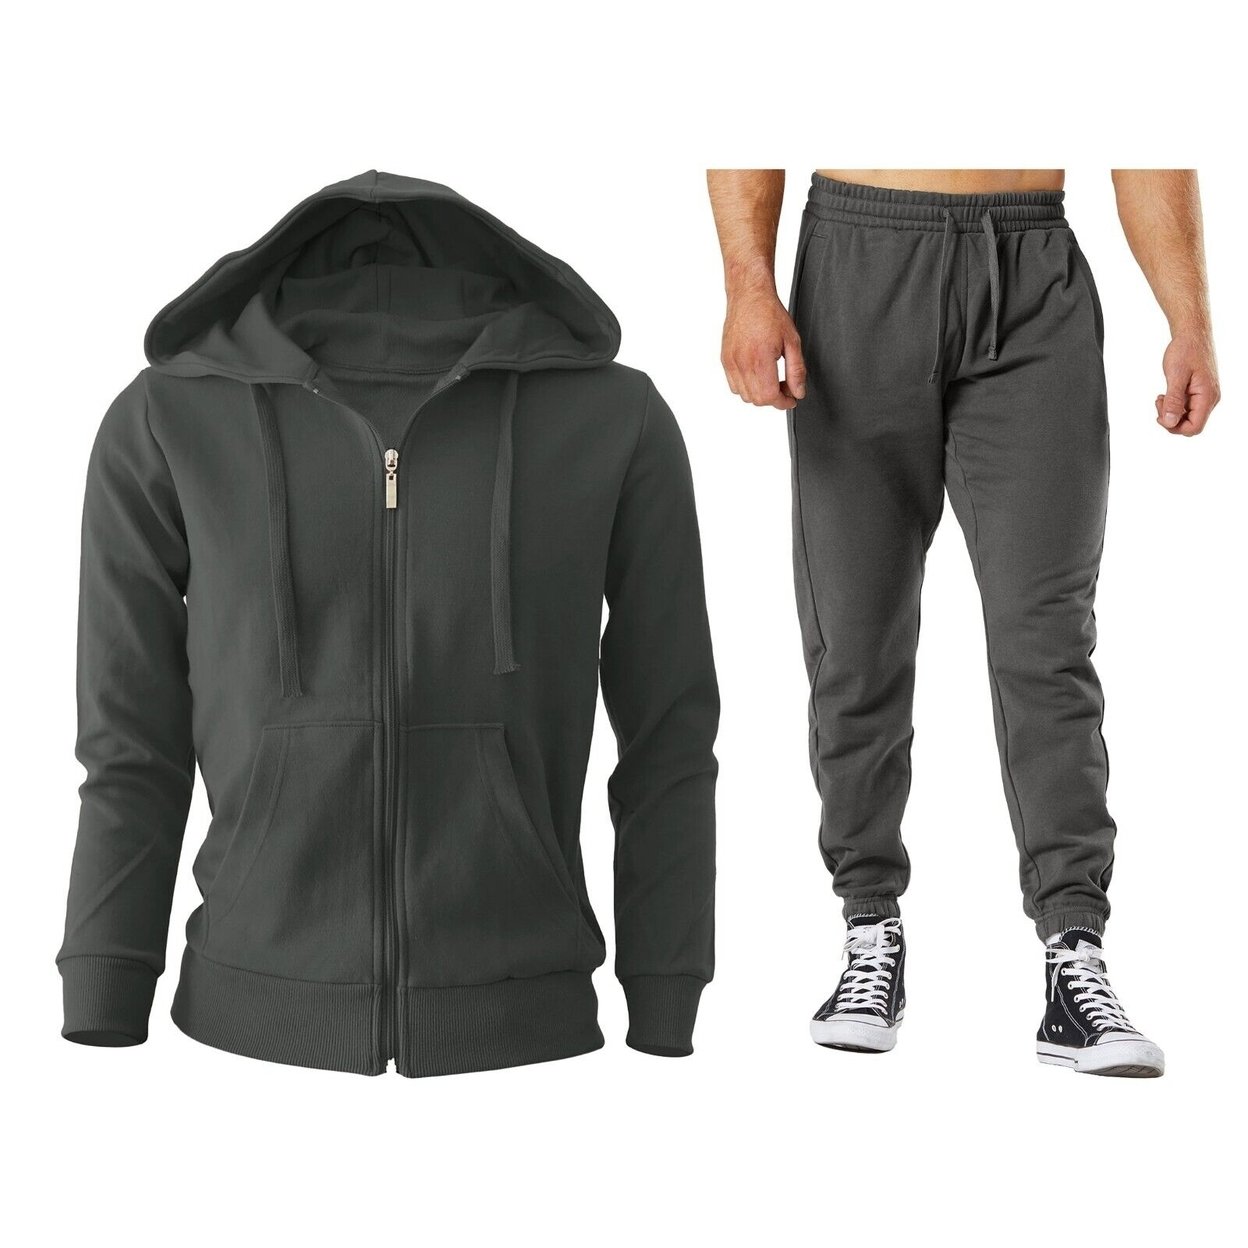 2/4-Piece: Men's Winter Warm Cozy Athletic Multi-Pockets BIG & TALL Sweatsuit Set - Charcoal, 2, Large